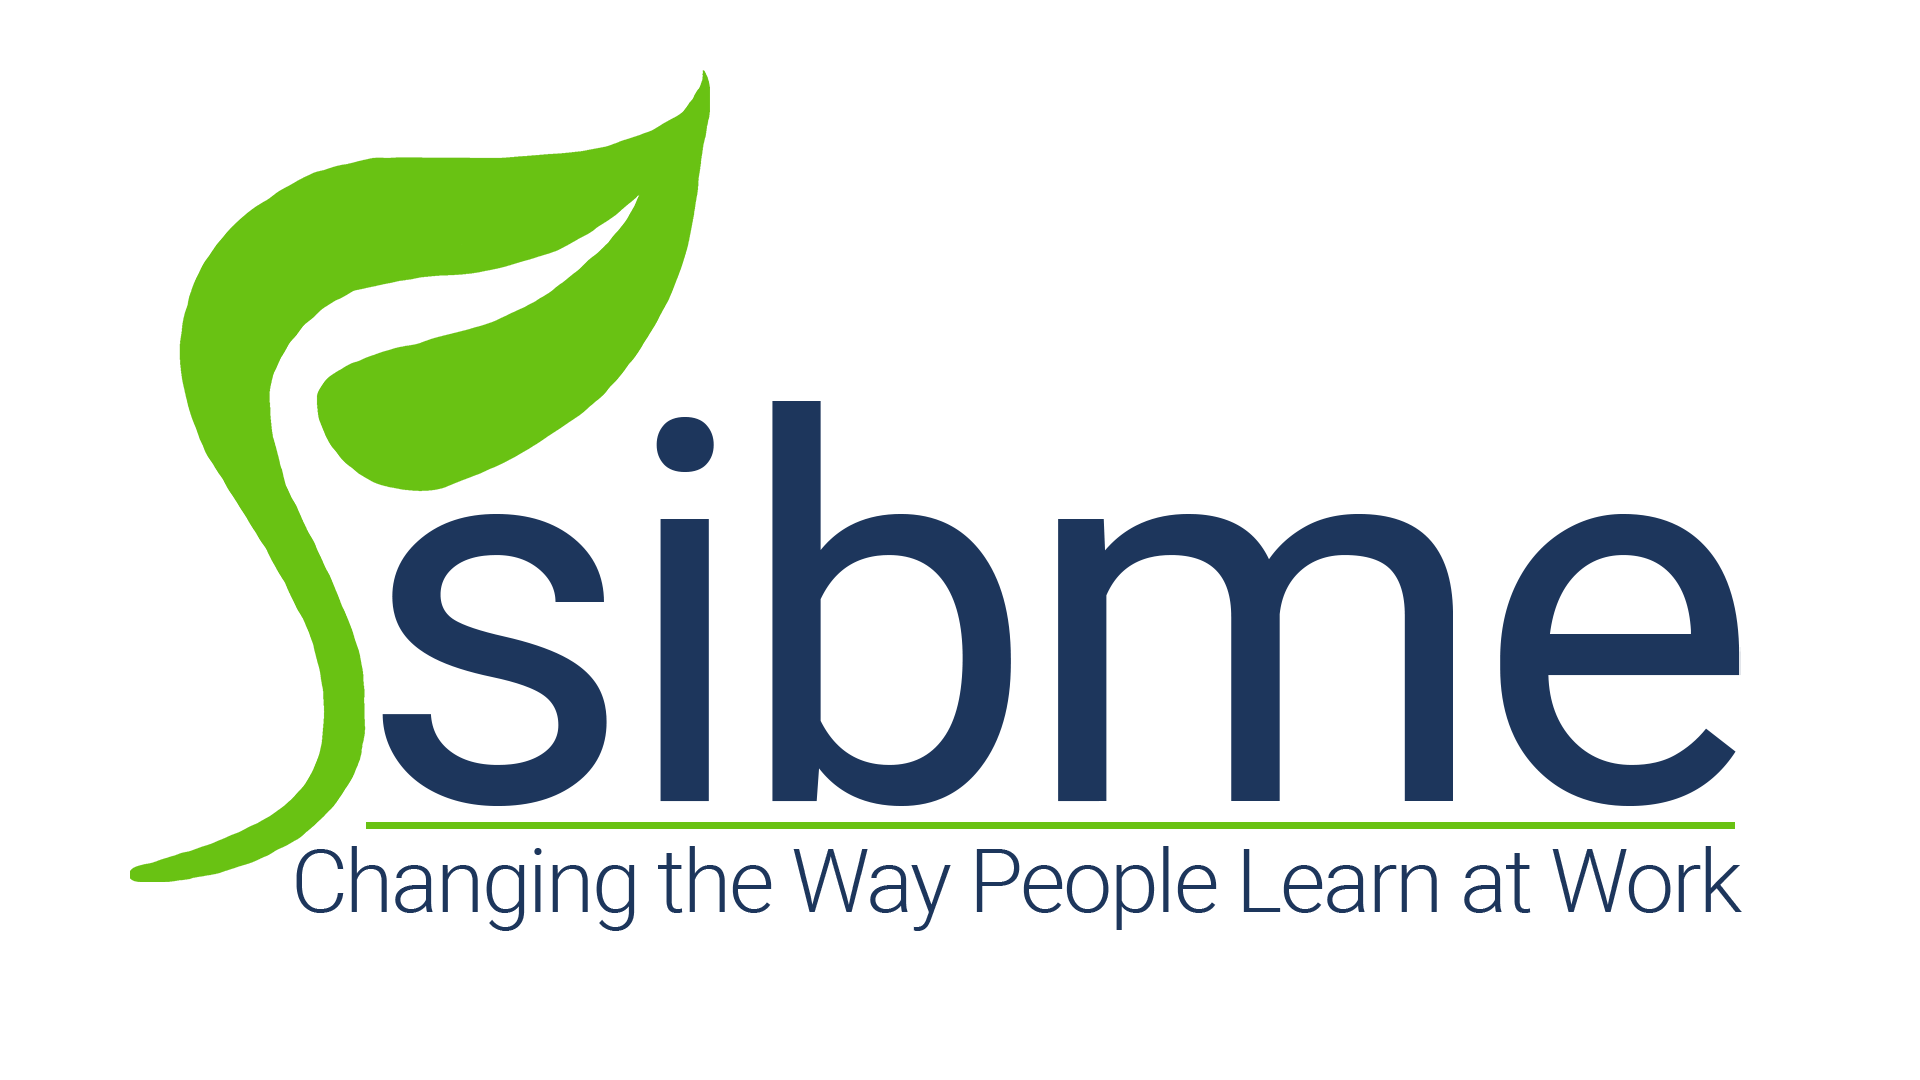 Sibme logo